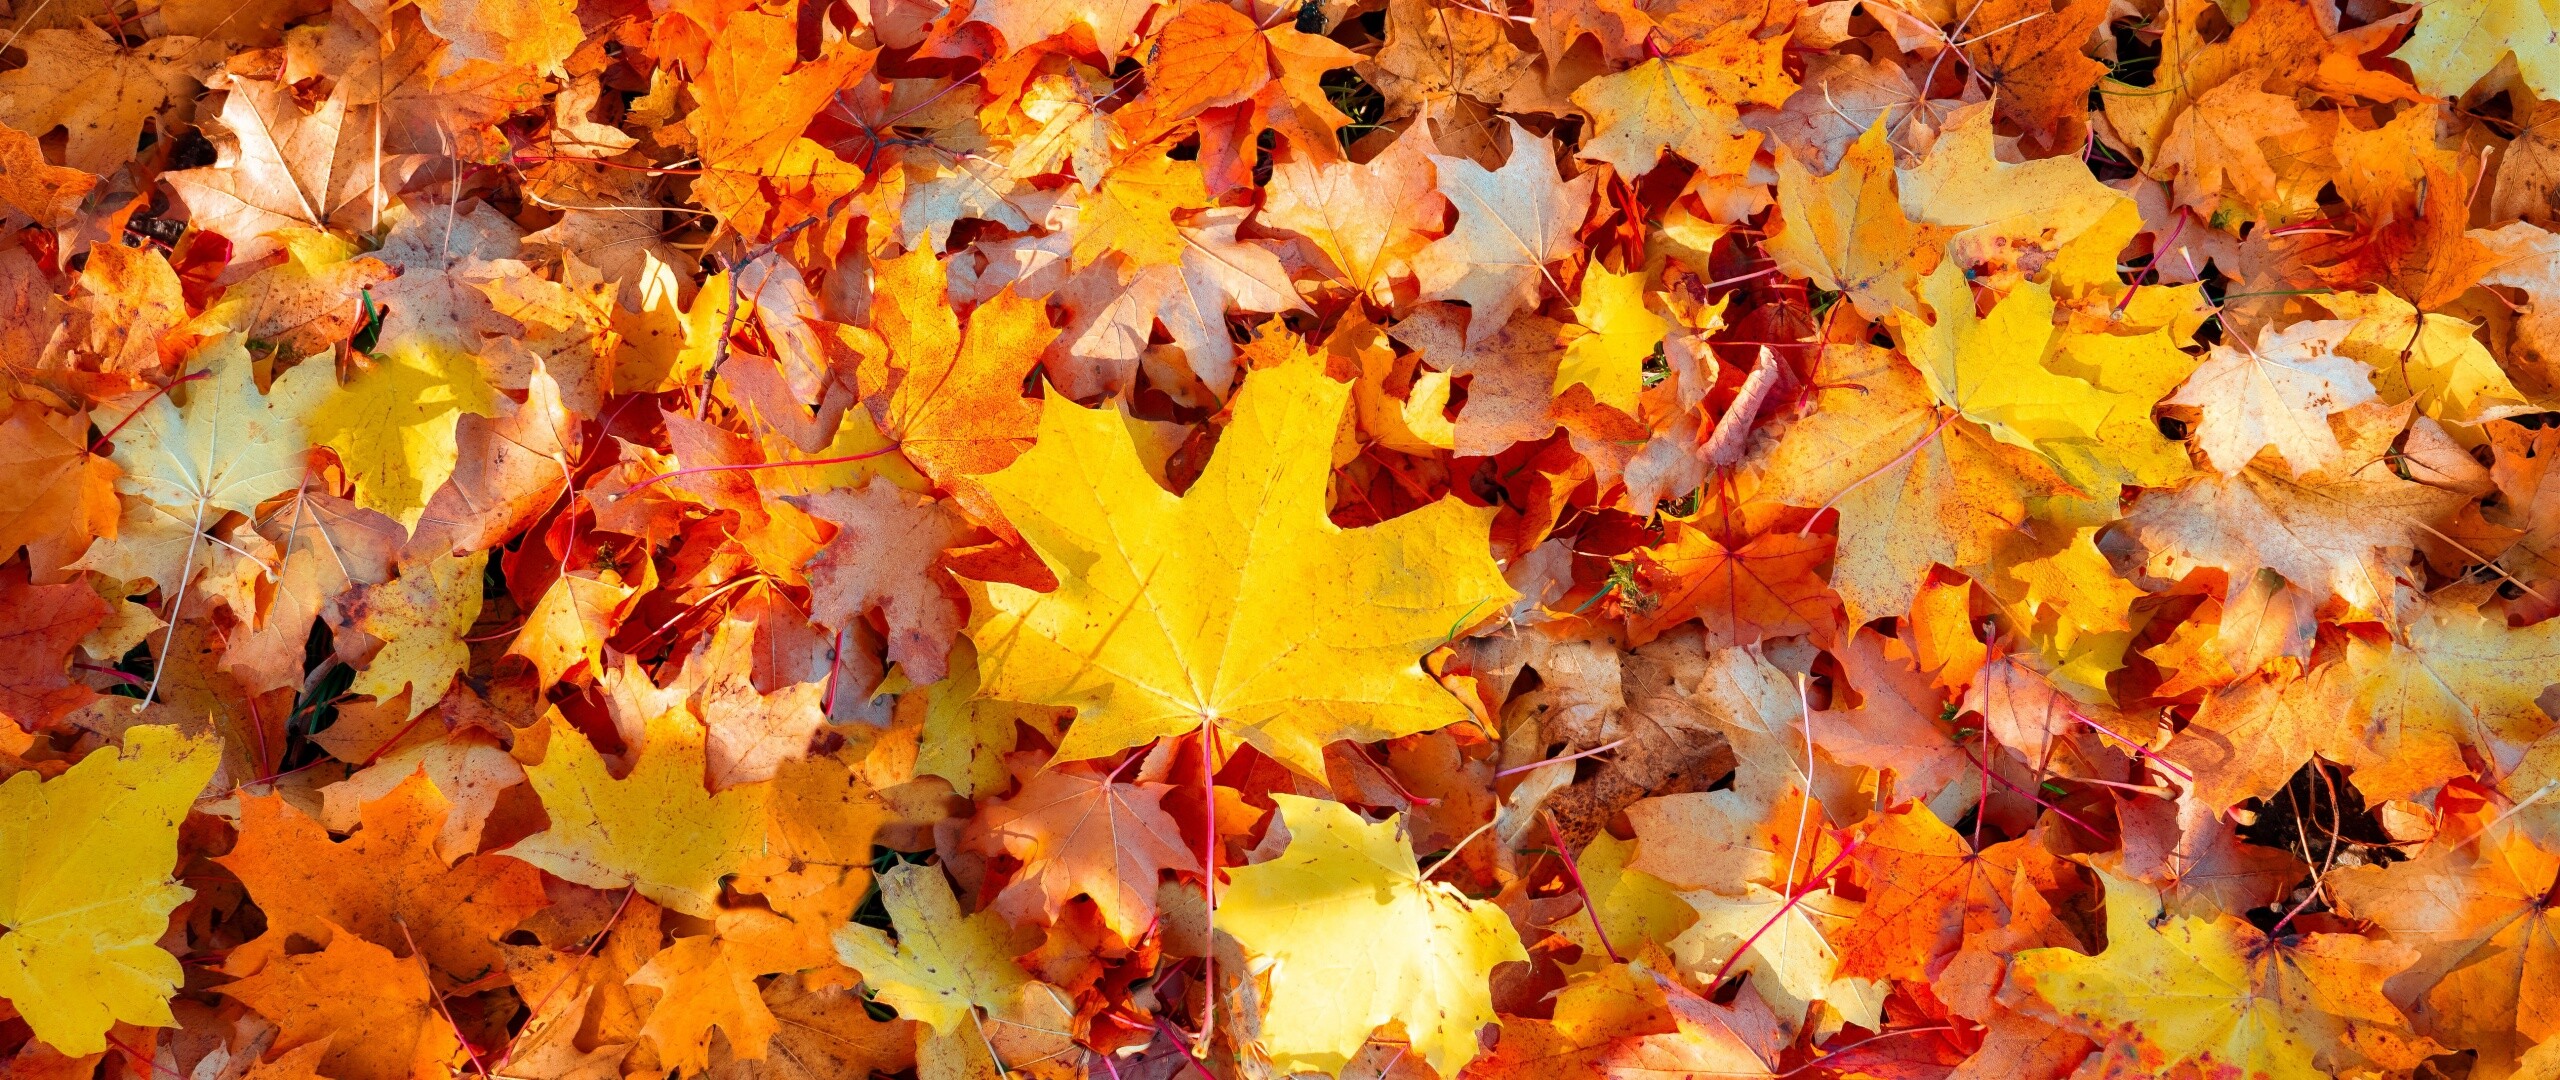 Leaves: Trees shedding their foliage, Maple tree. 2560x1080 Dual Screen Wallpaper.